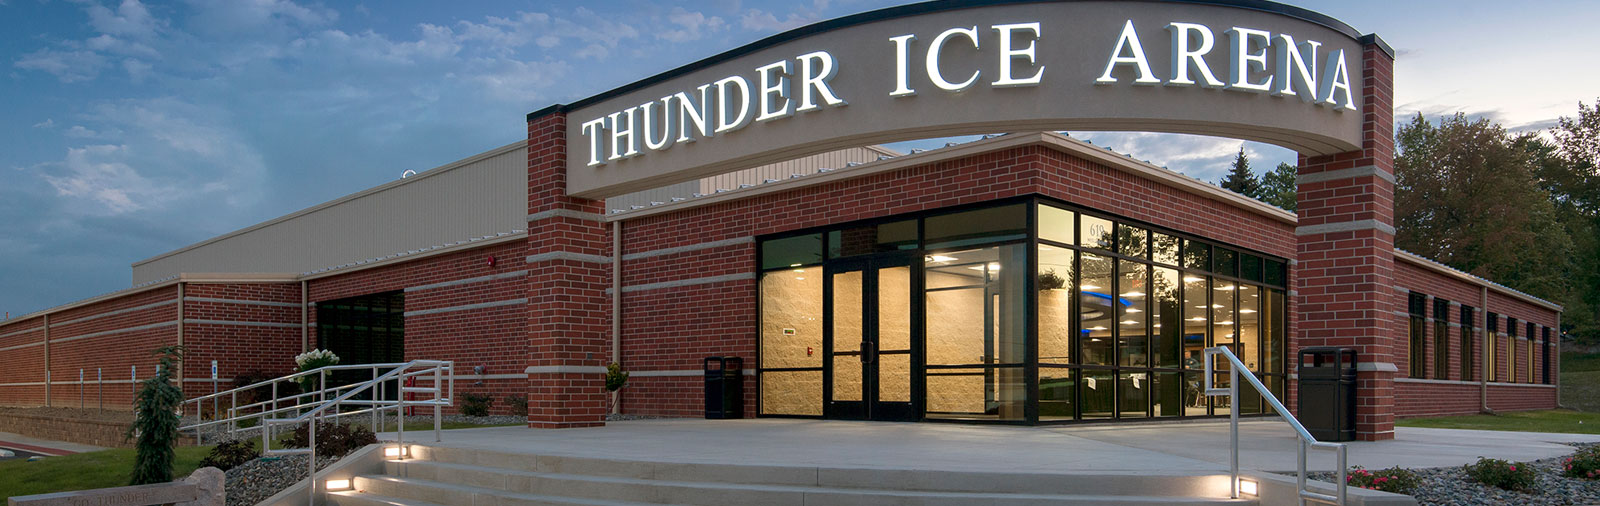 Thunder Ice Arena